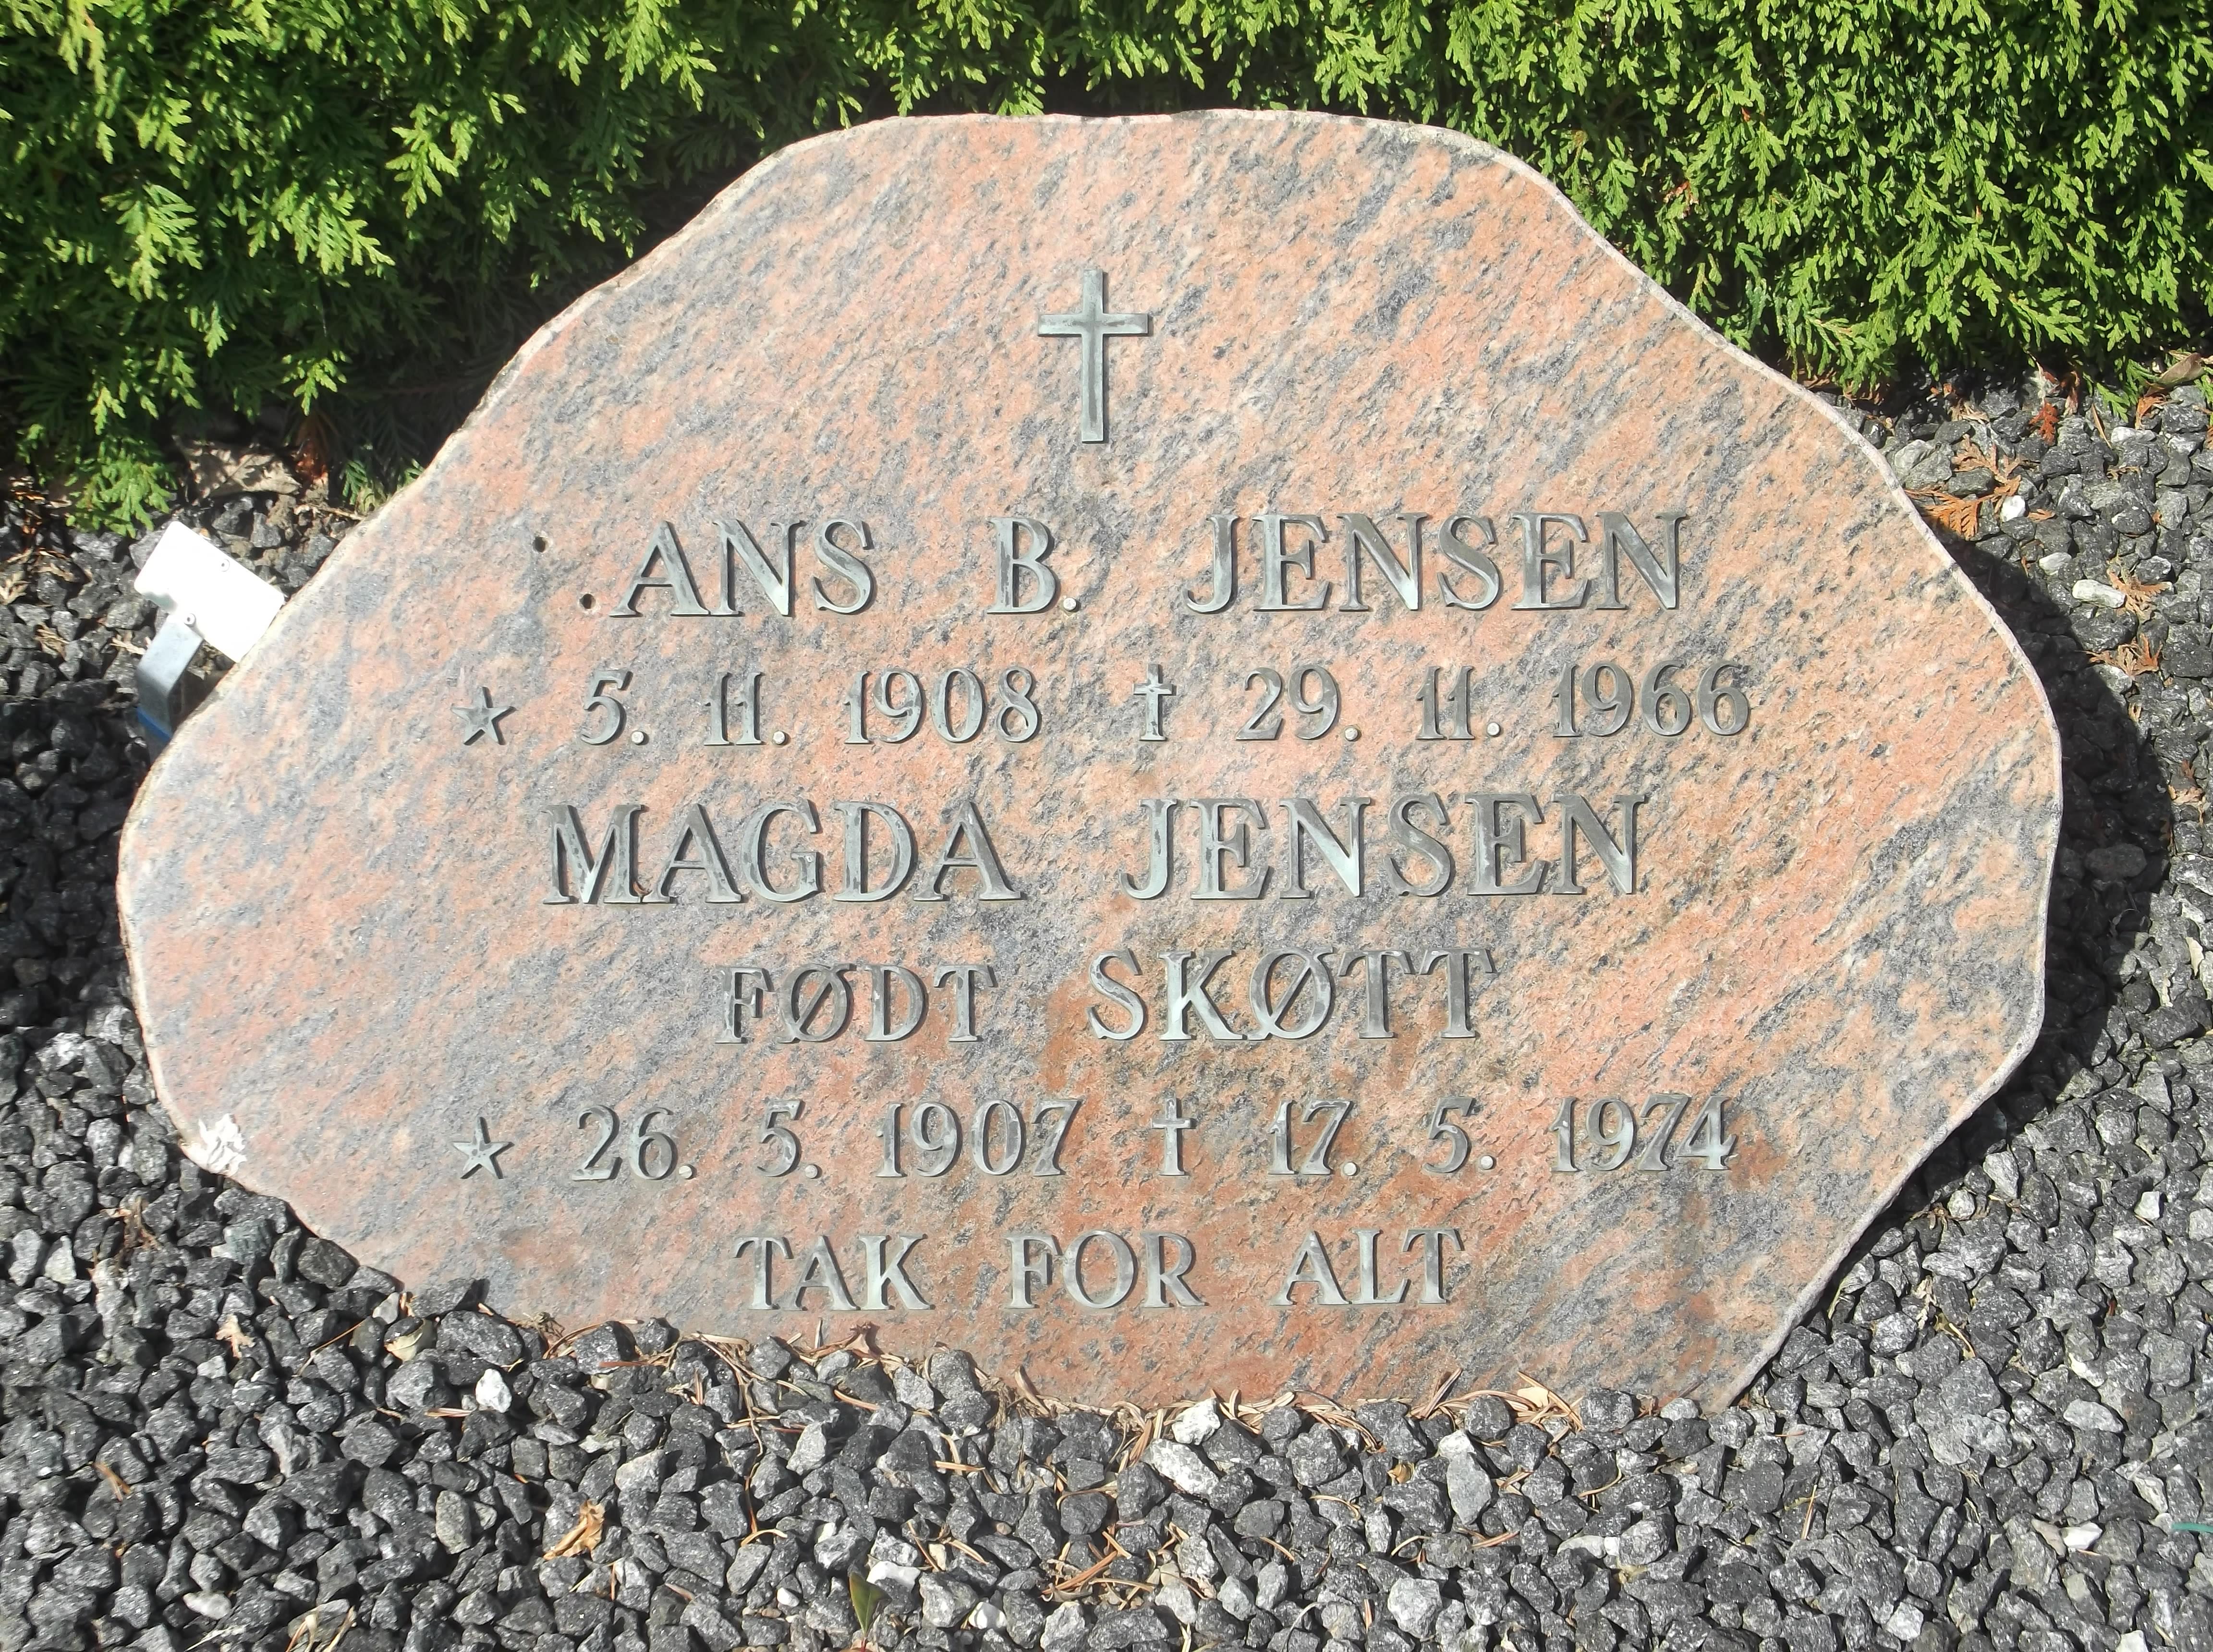 Hans B. Jensen